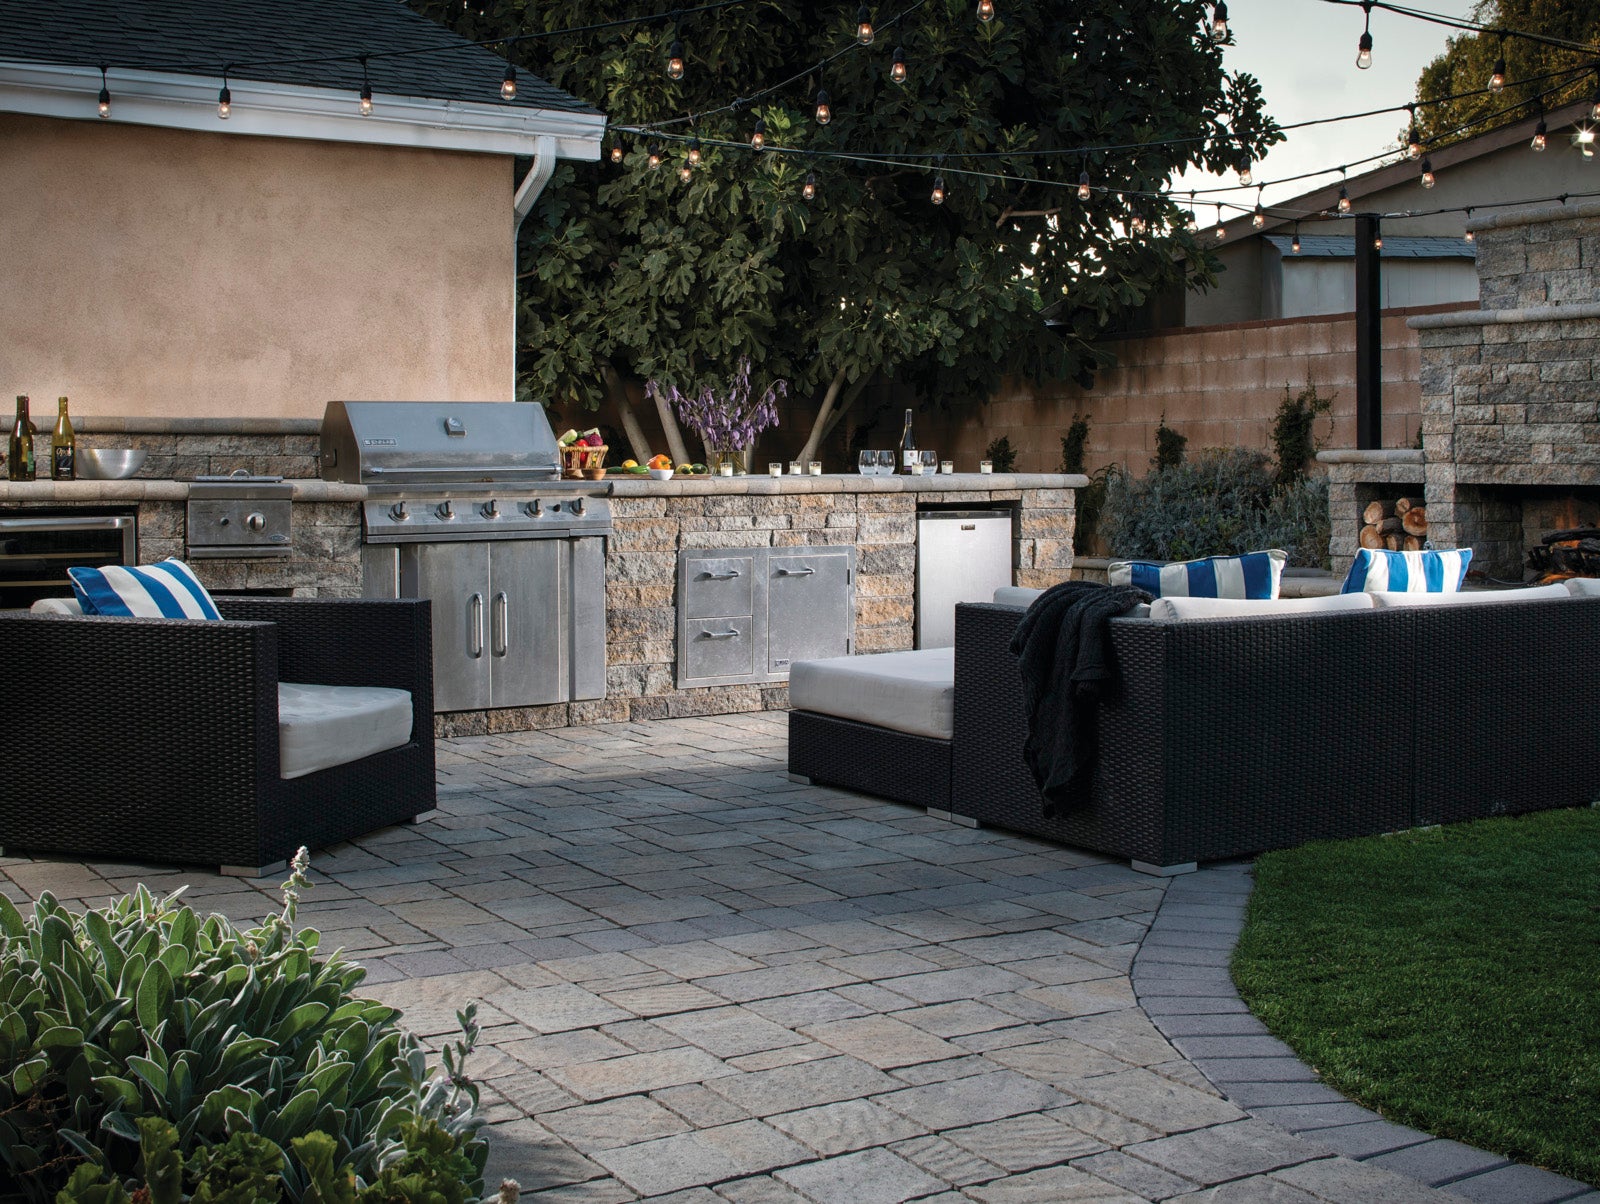 This outdoor kitchen design incorporates drought-tolerant plants, 